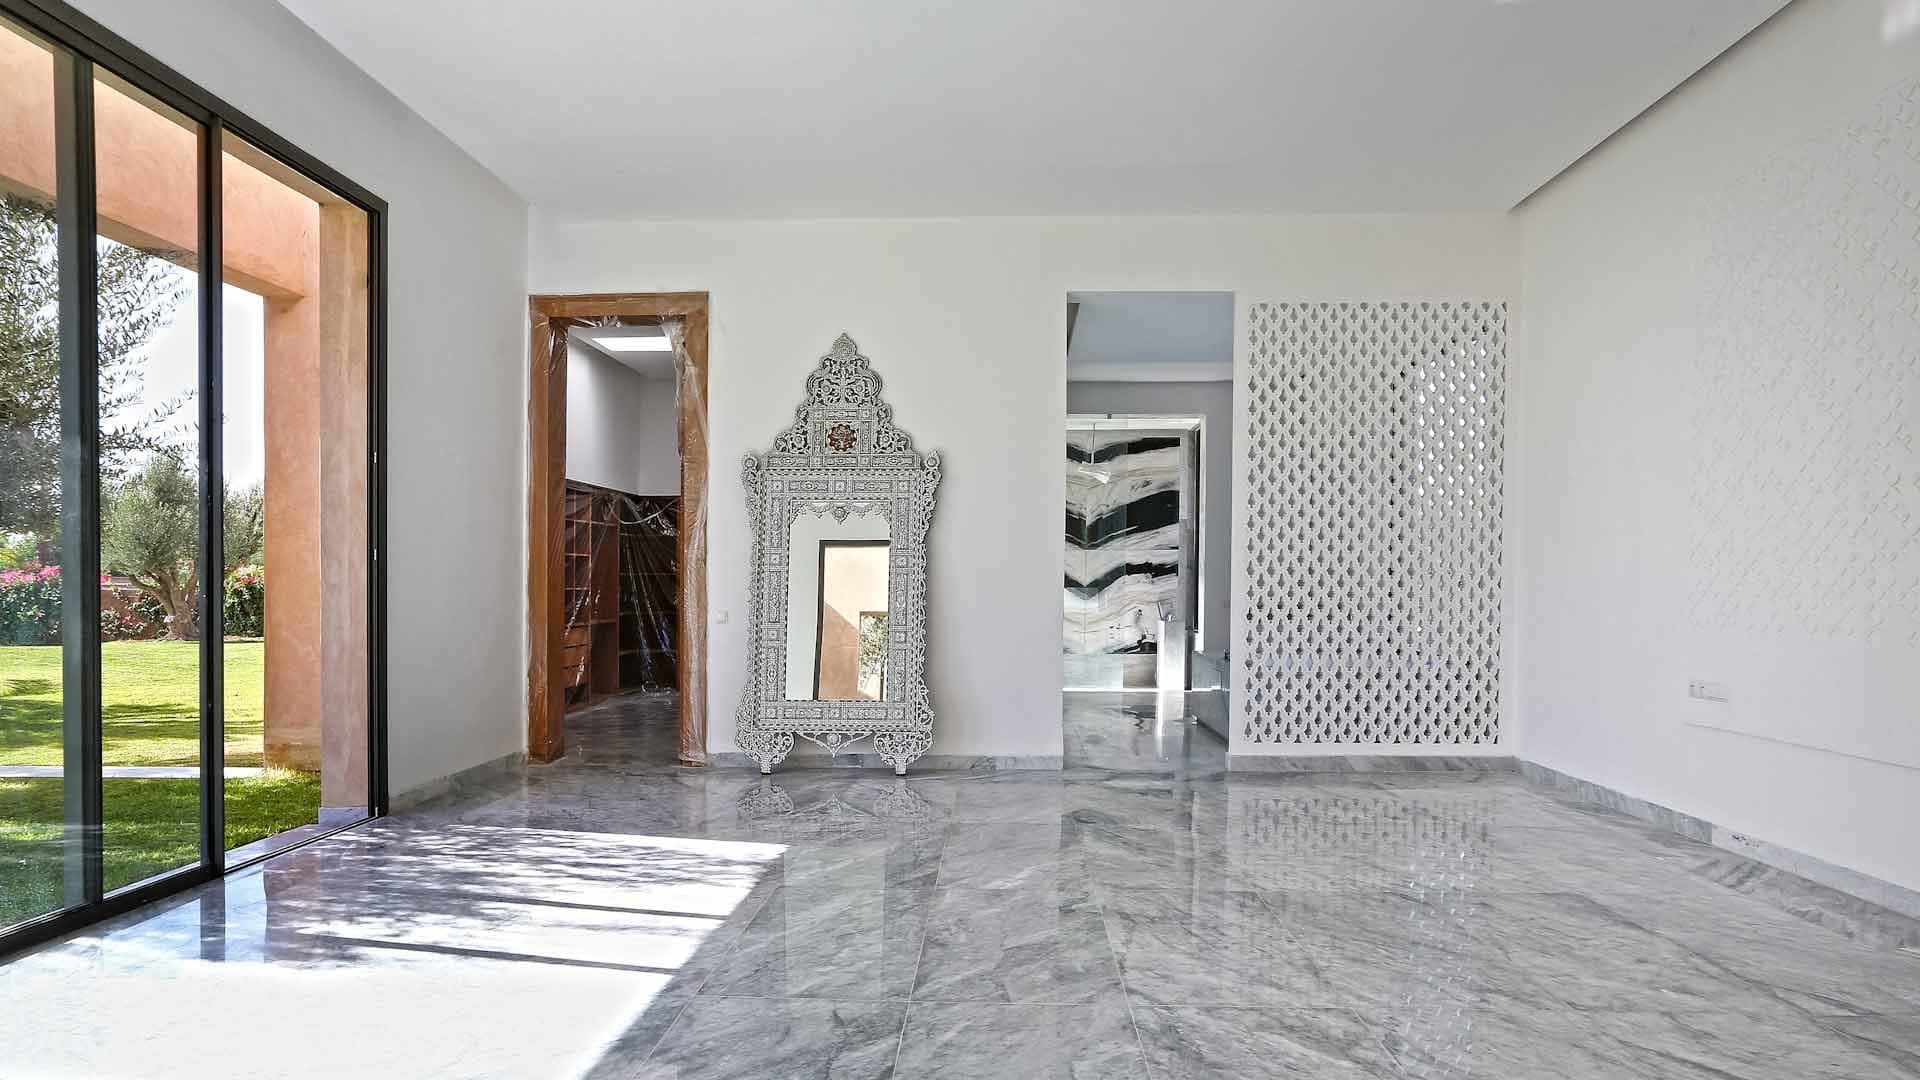 6 Bedroom Villa For Sale Marrakech Lp08723 25fa592a79df6200.jpg